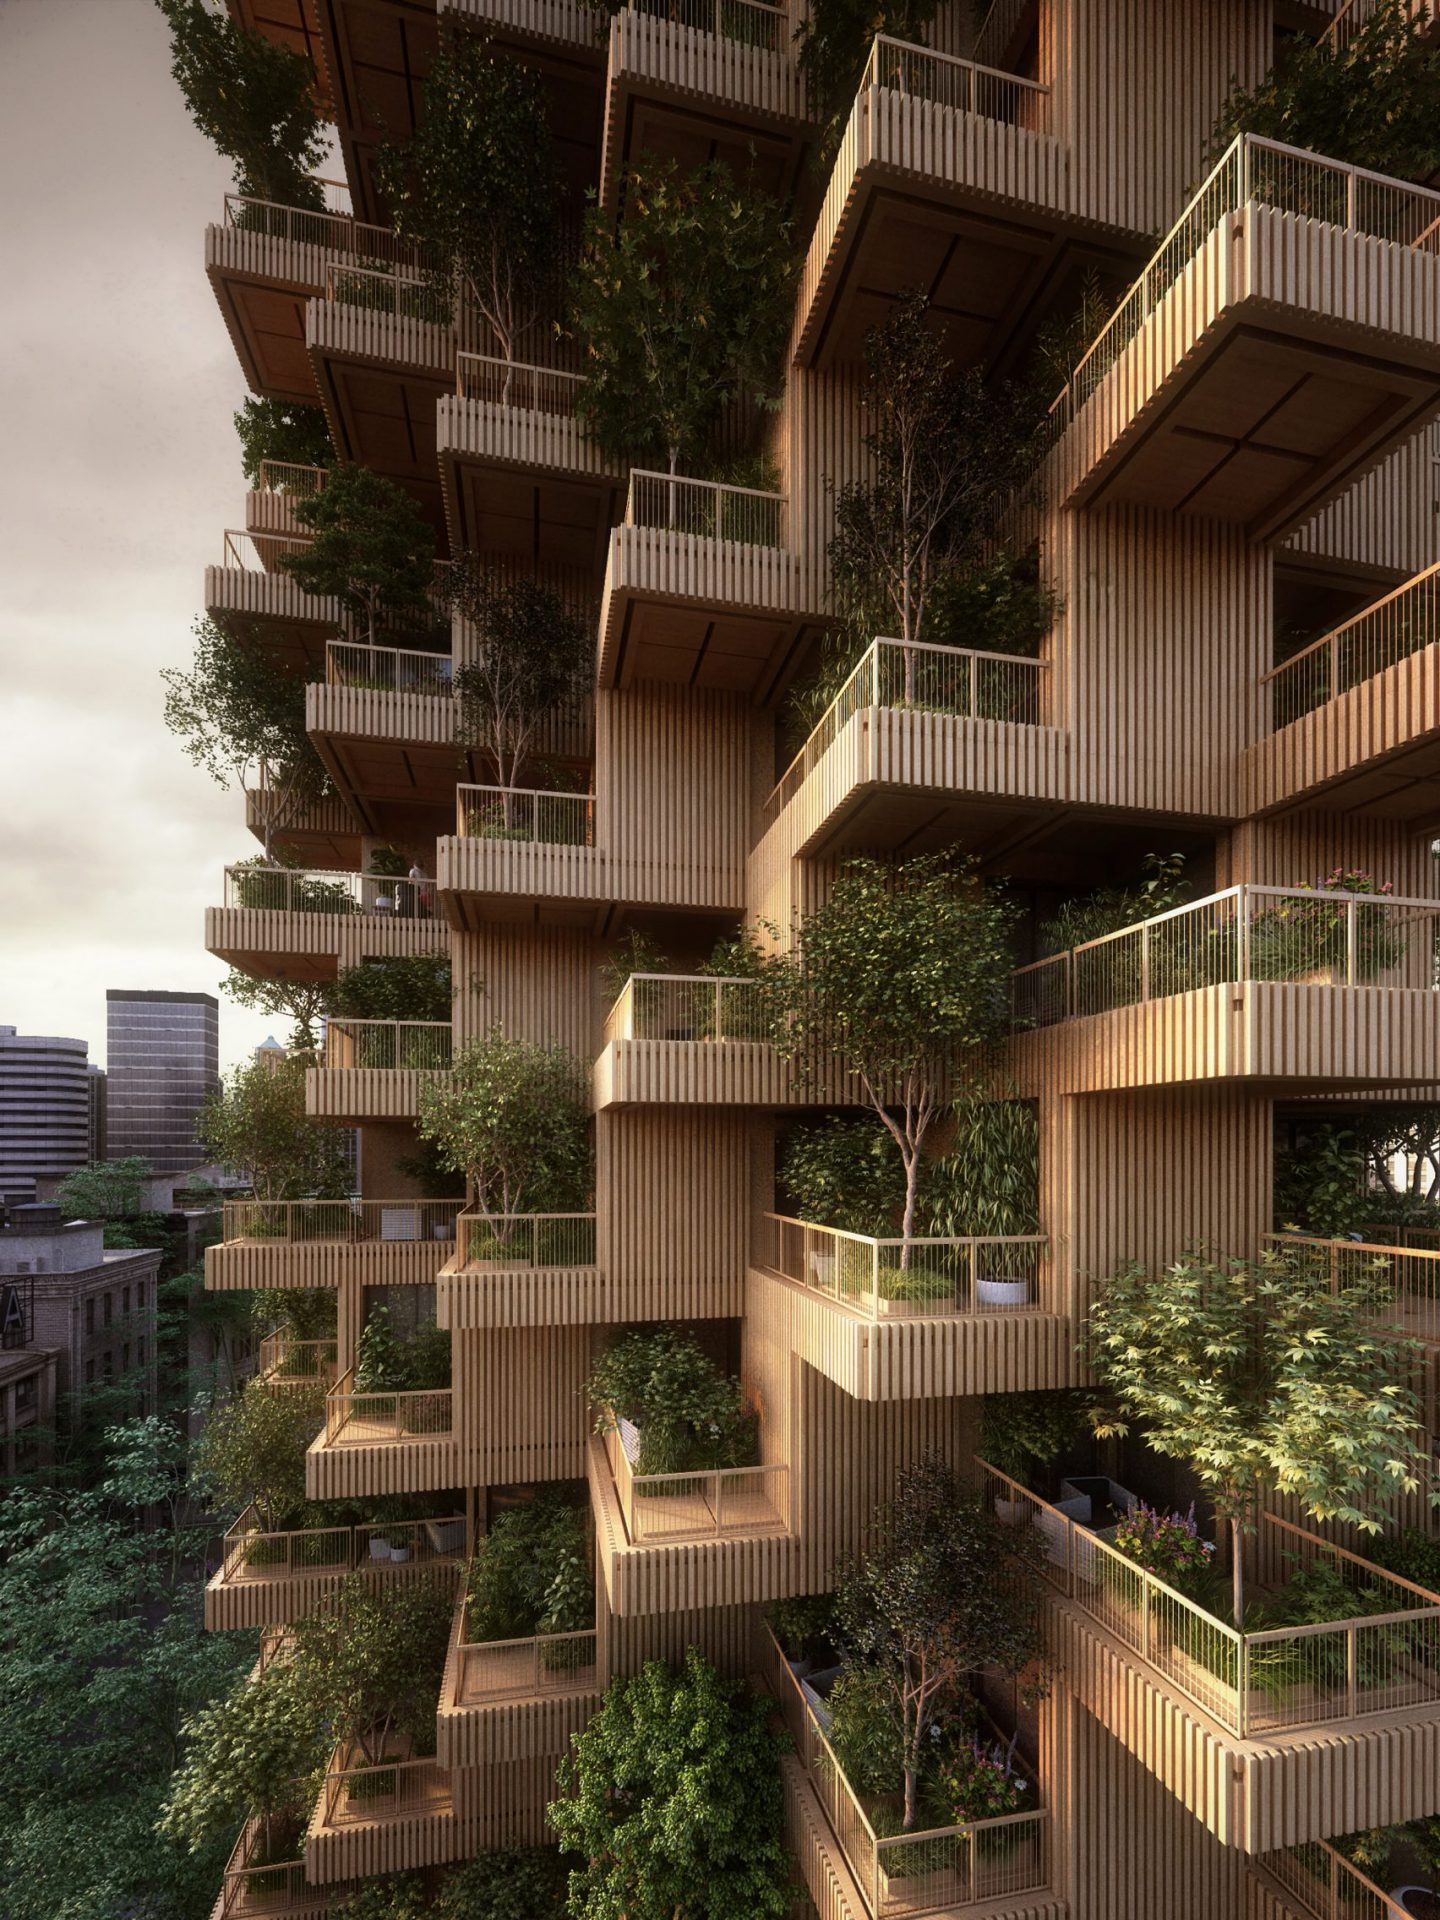 Penda timber tower - Toronto - Proposal